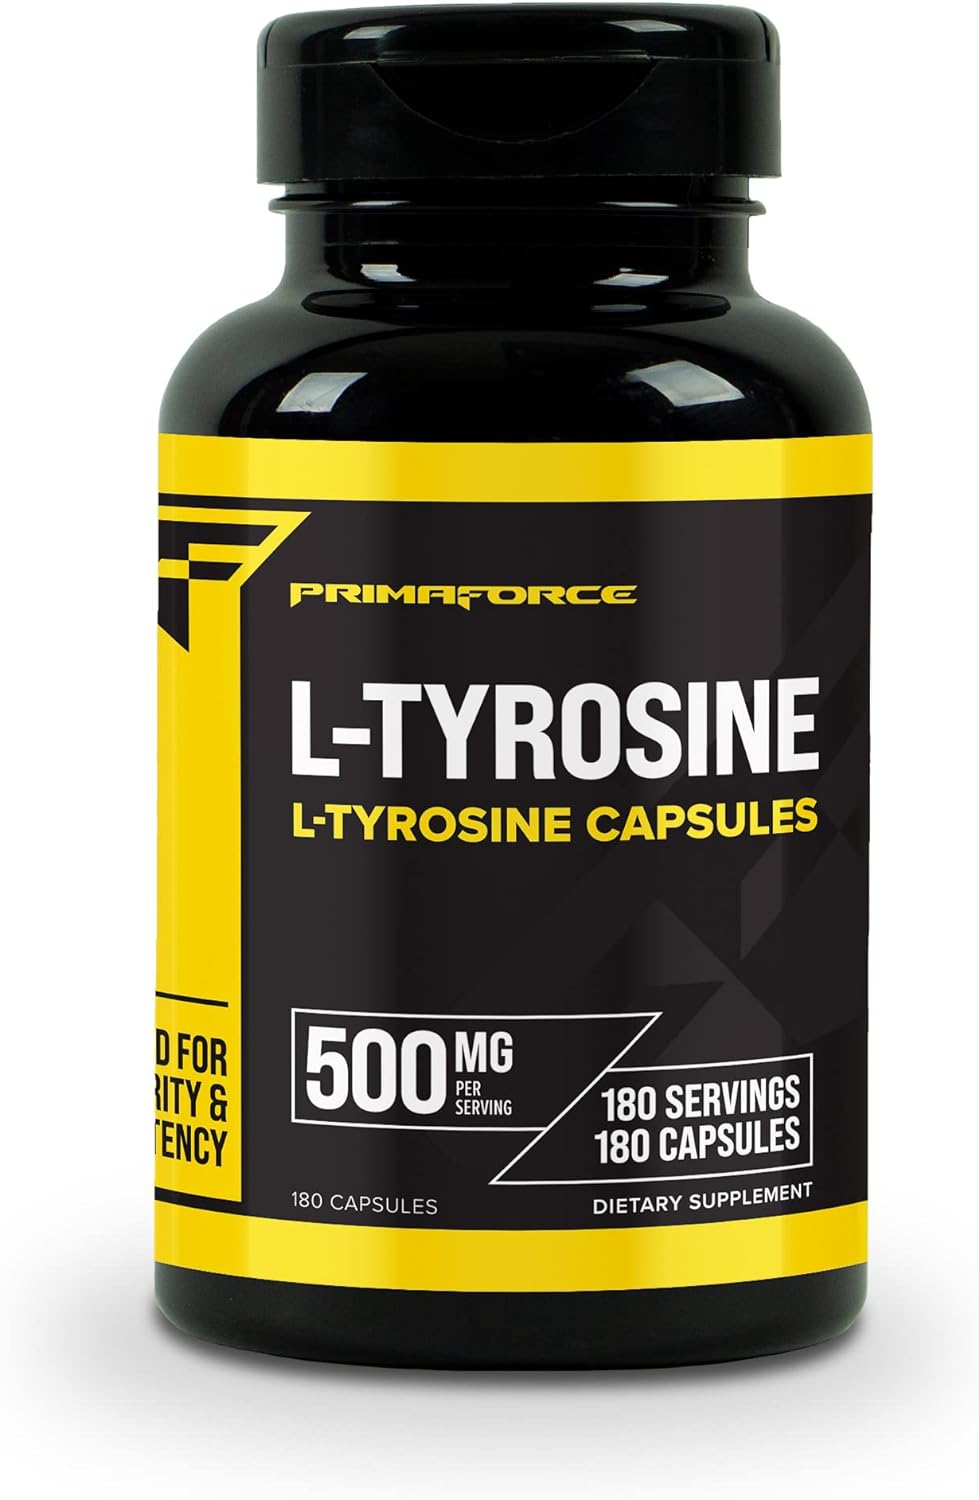 Primaforce L-Tyrosine Supplement, 180 Capsules, 500mg Per Serving